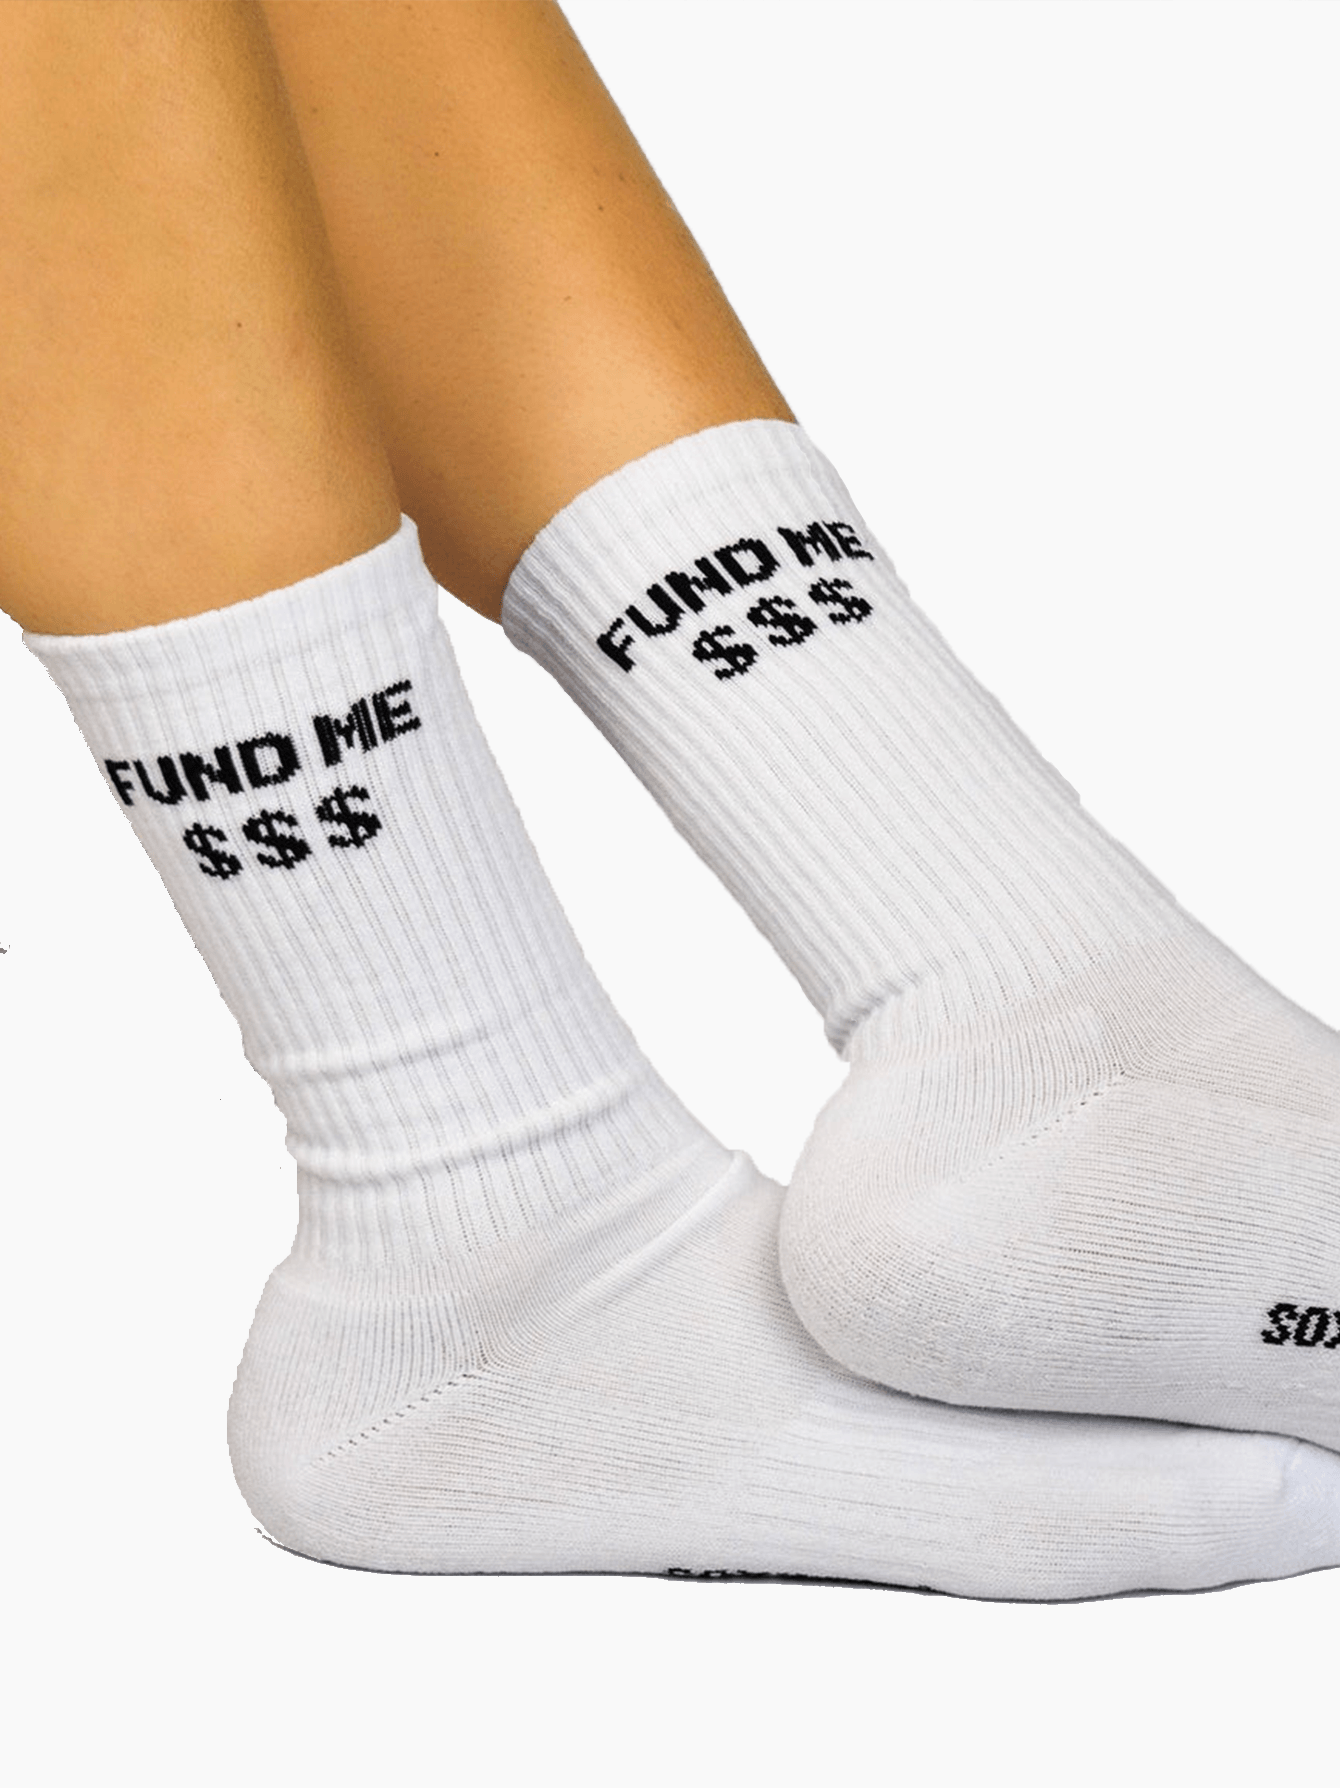 Fund Me White Socks